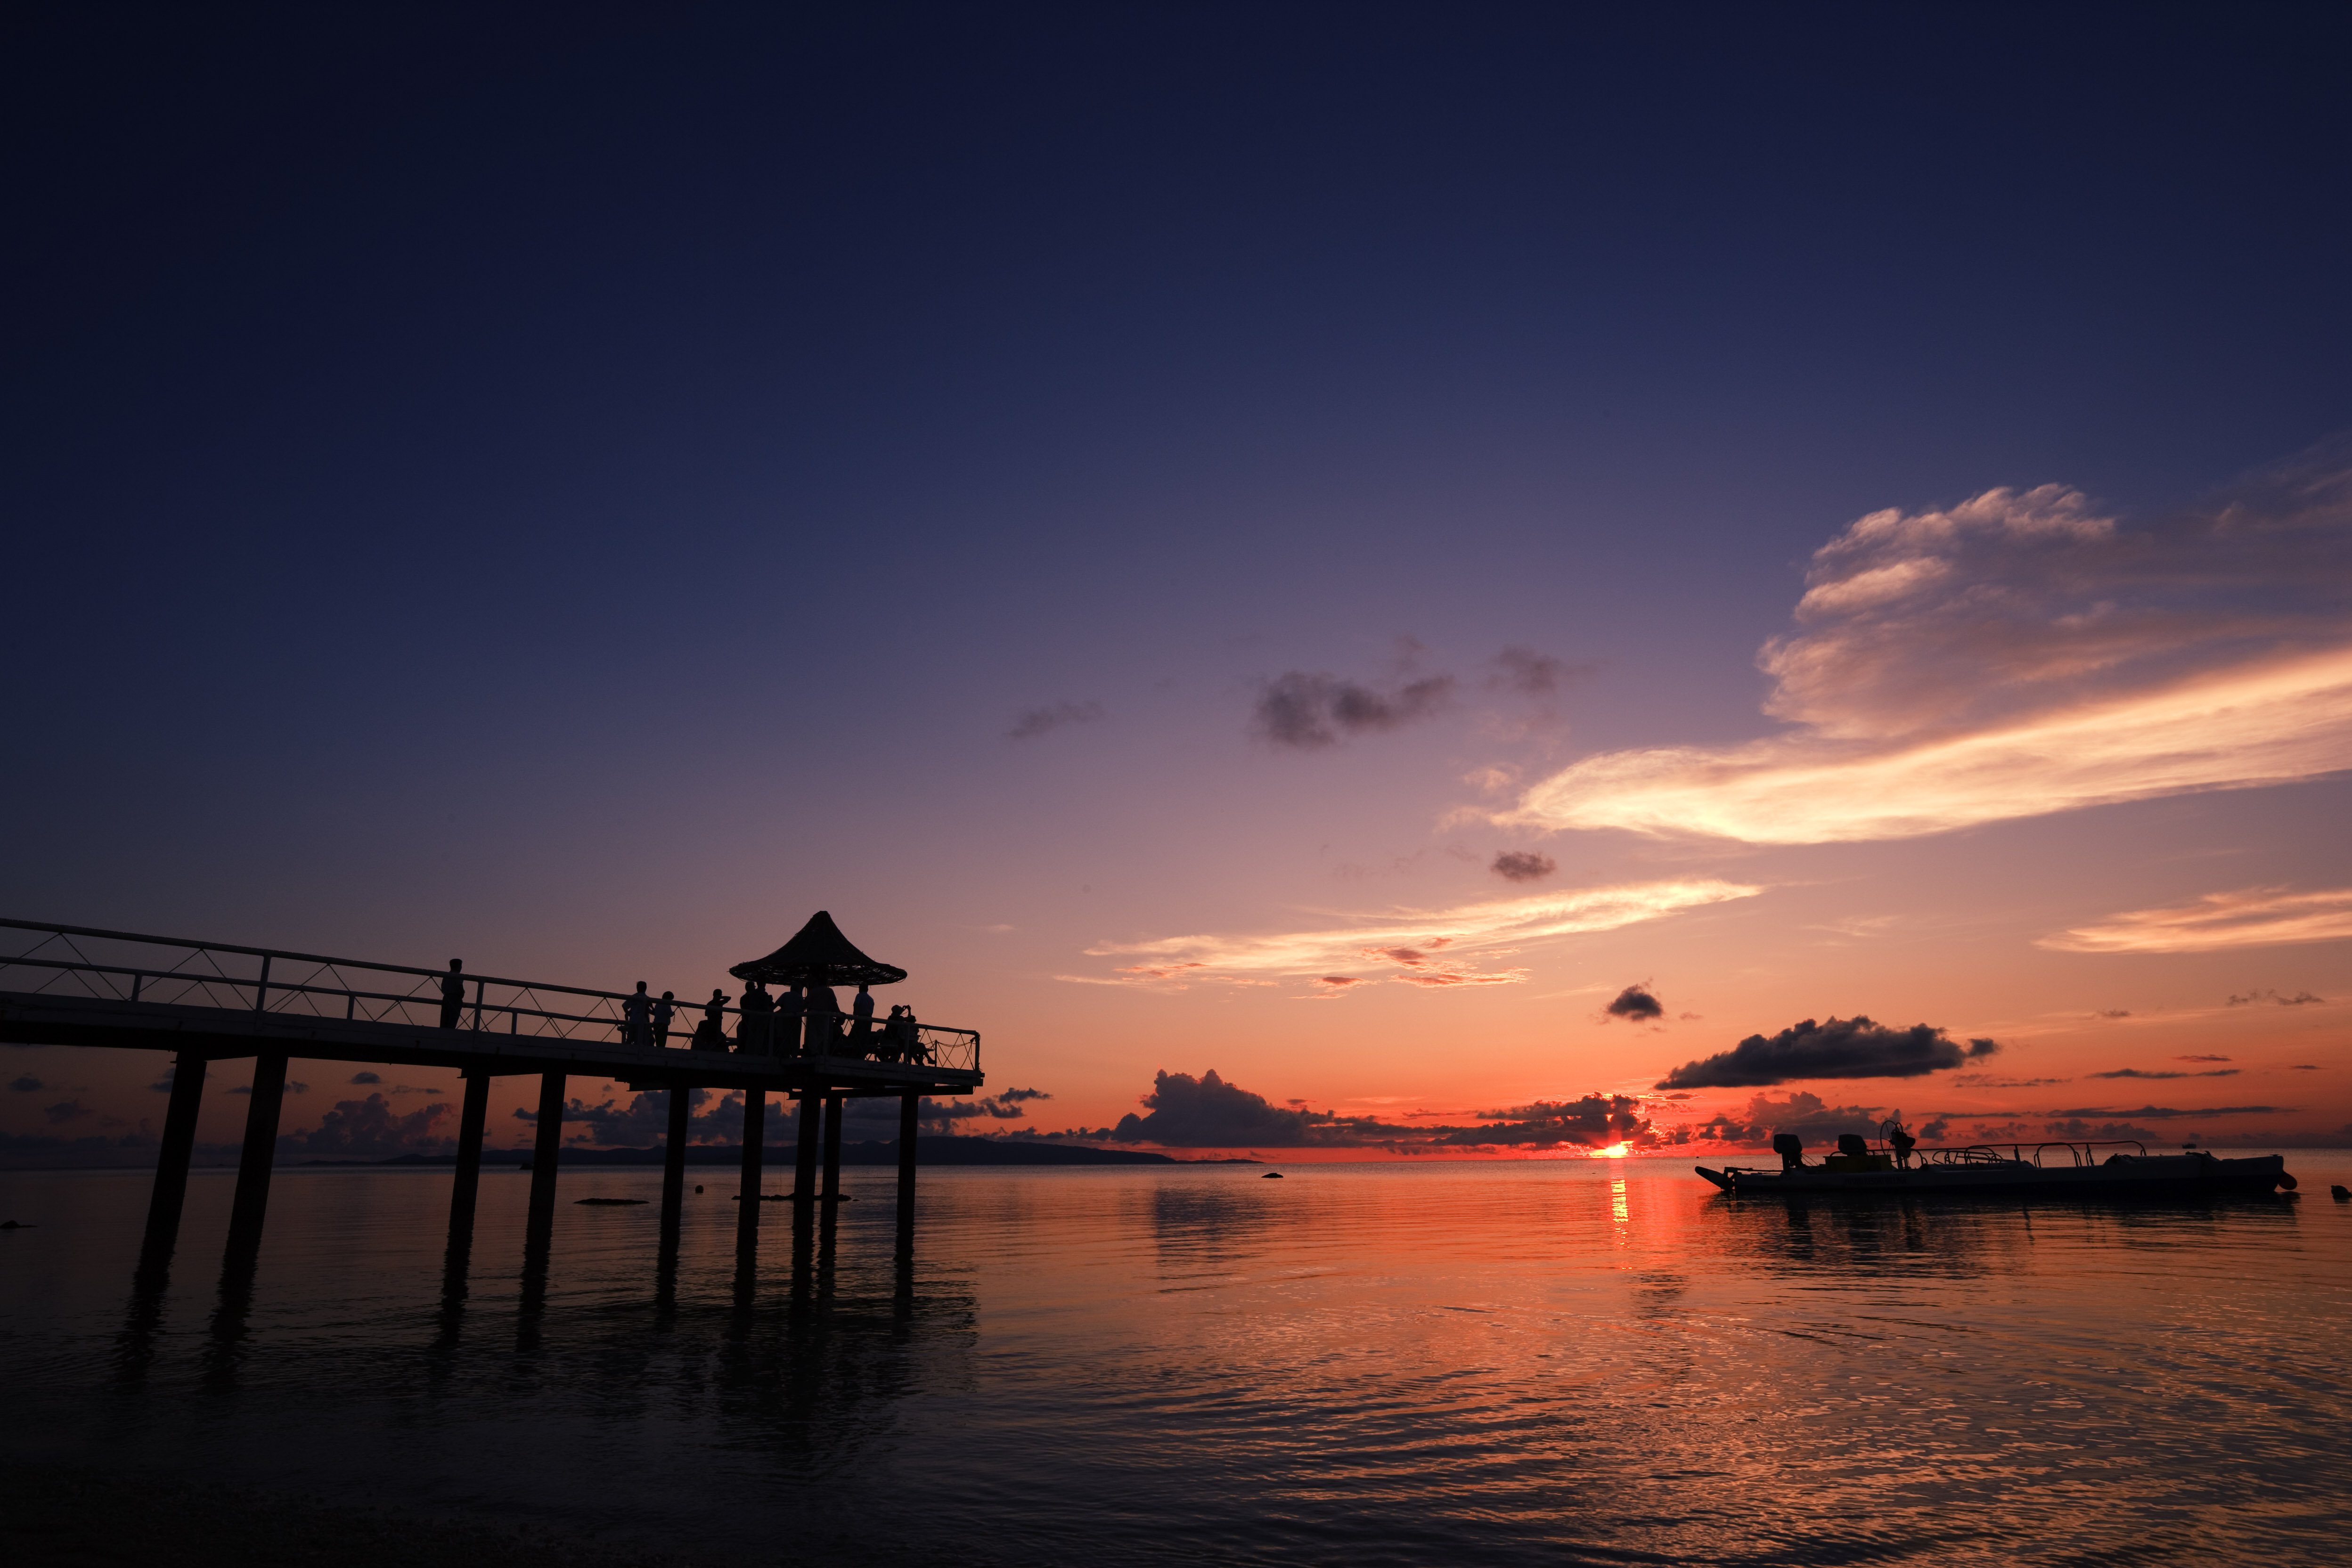 fotografia, material, livra, ajardine, imagine, proveja fotografia,Crepsculo de ilha de Ishigaki-jima, barcaa, isqueiro, O sol, silhueta